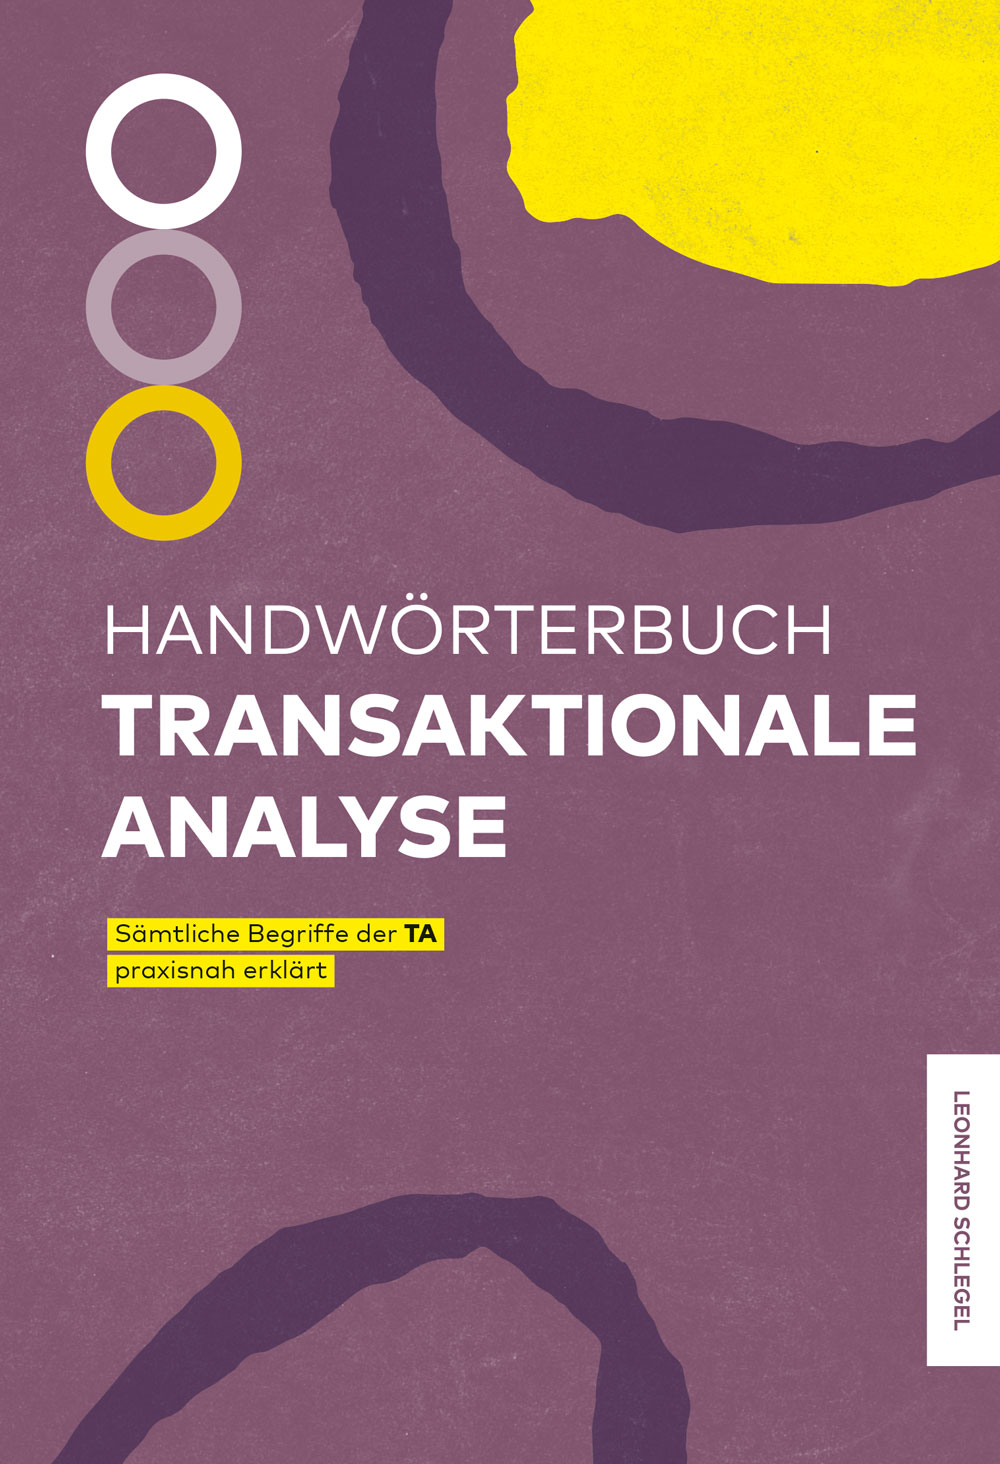 Handwörterbuch Transaktionale Analyse